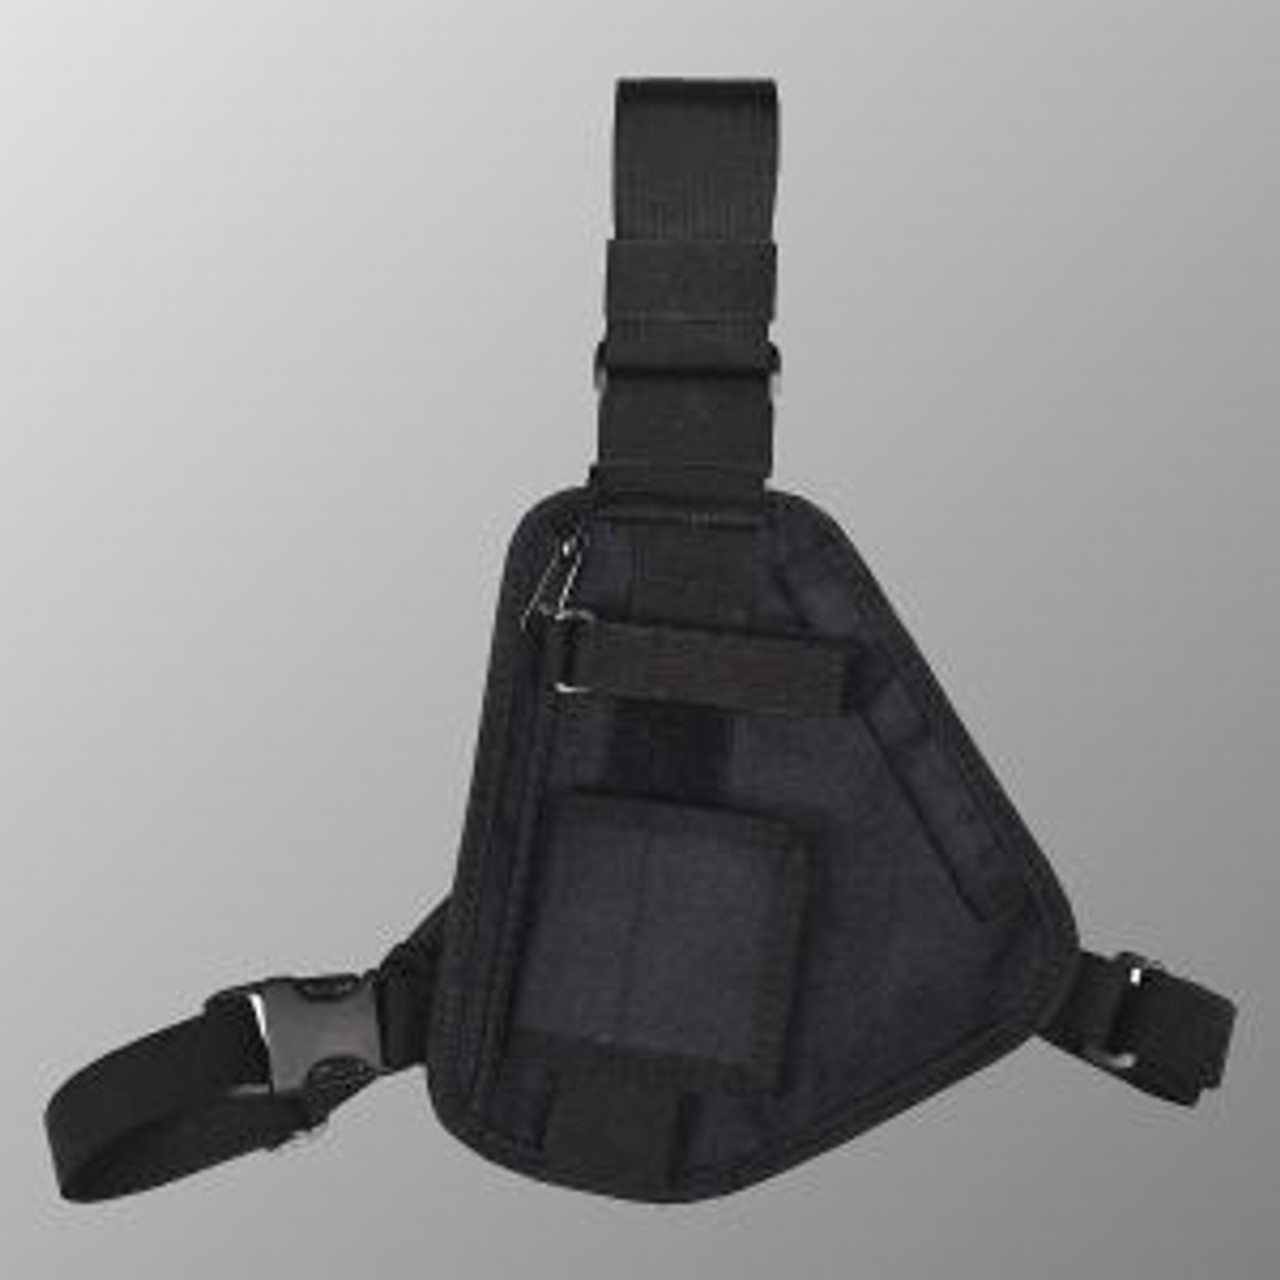 ICOM IC-F50V 3-Point Chest Harness - Black